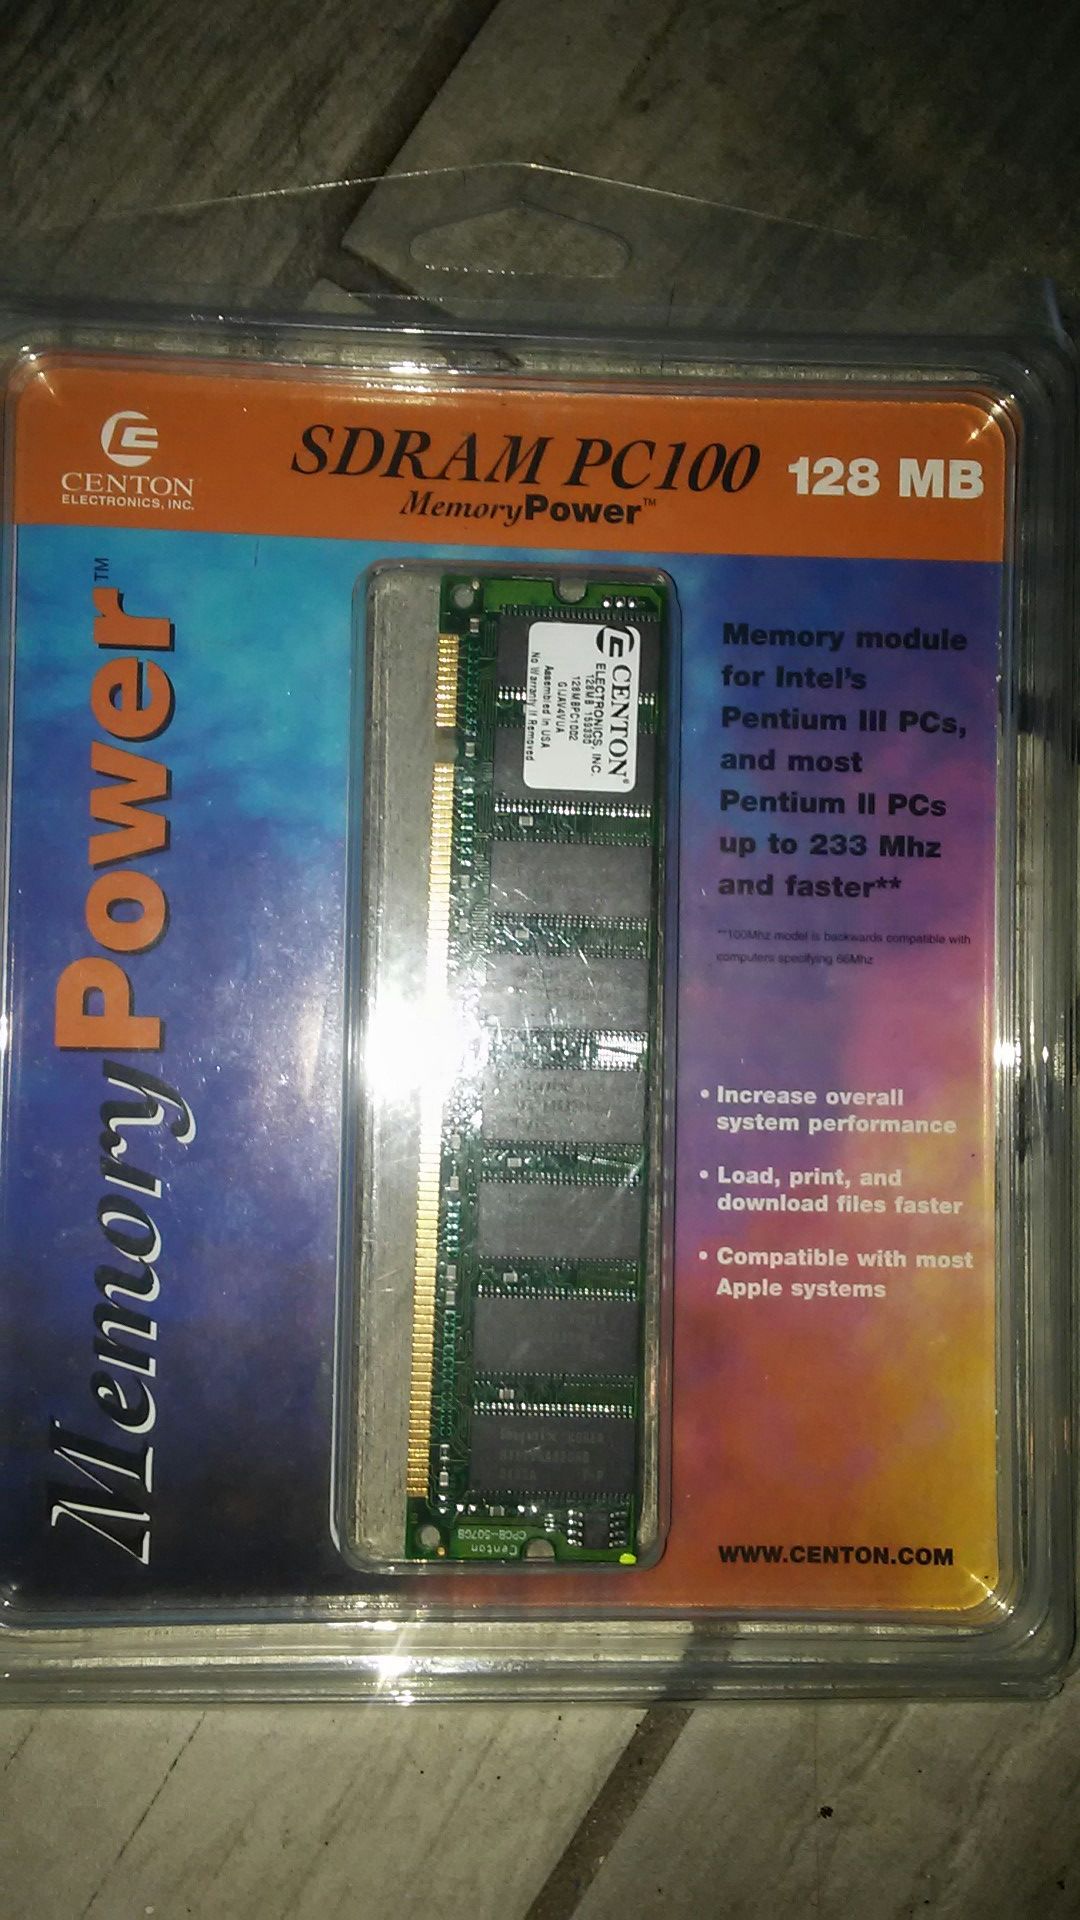 SDRAM PC100 Memory Power 128MB